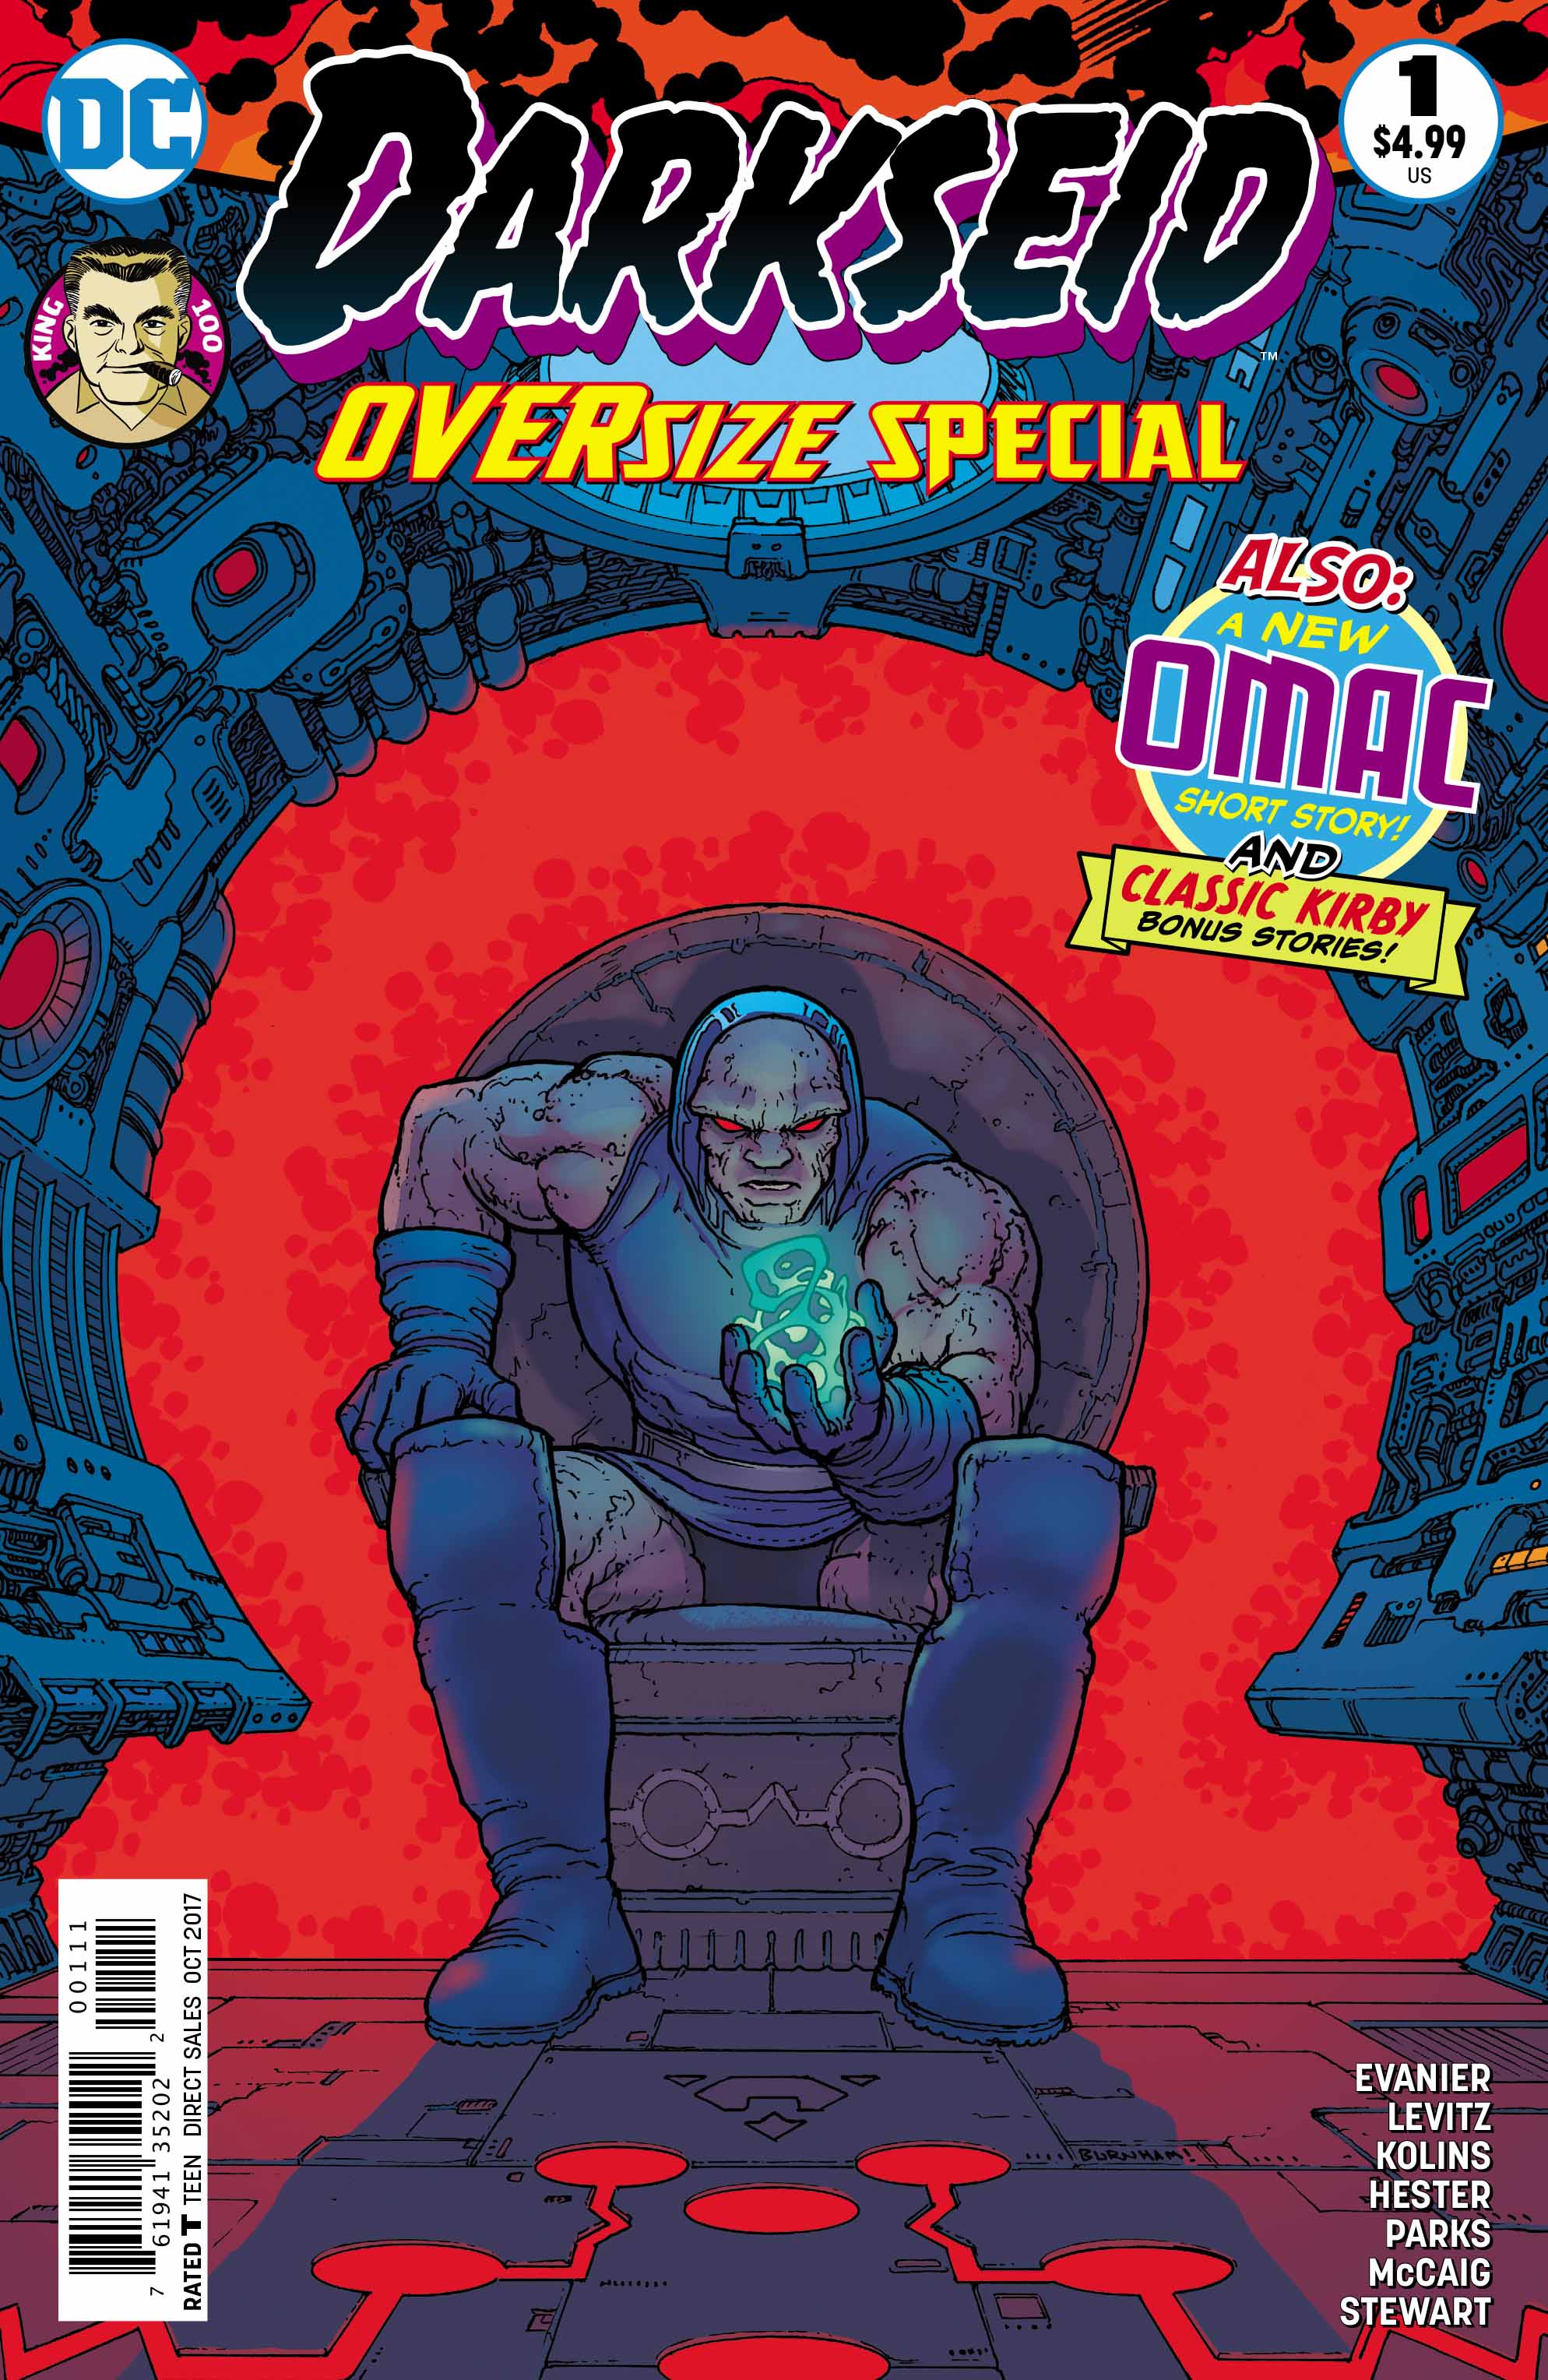 Darkseid Cover - DC Comics News